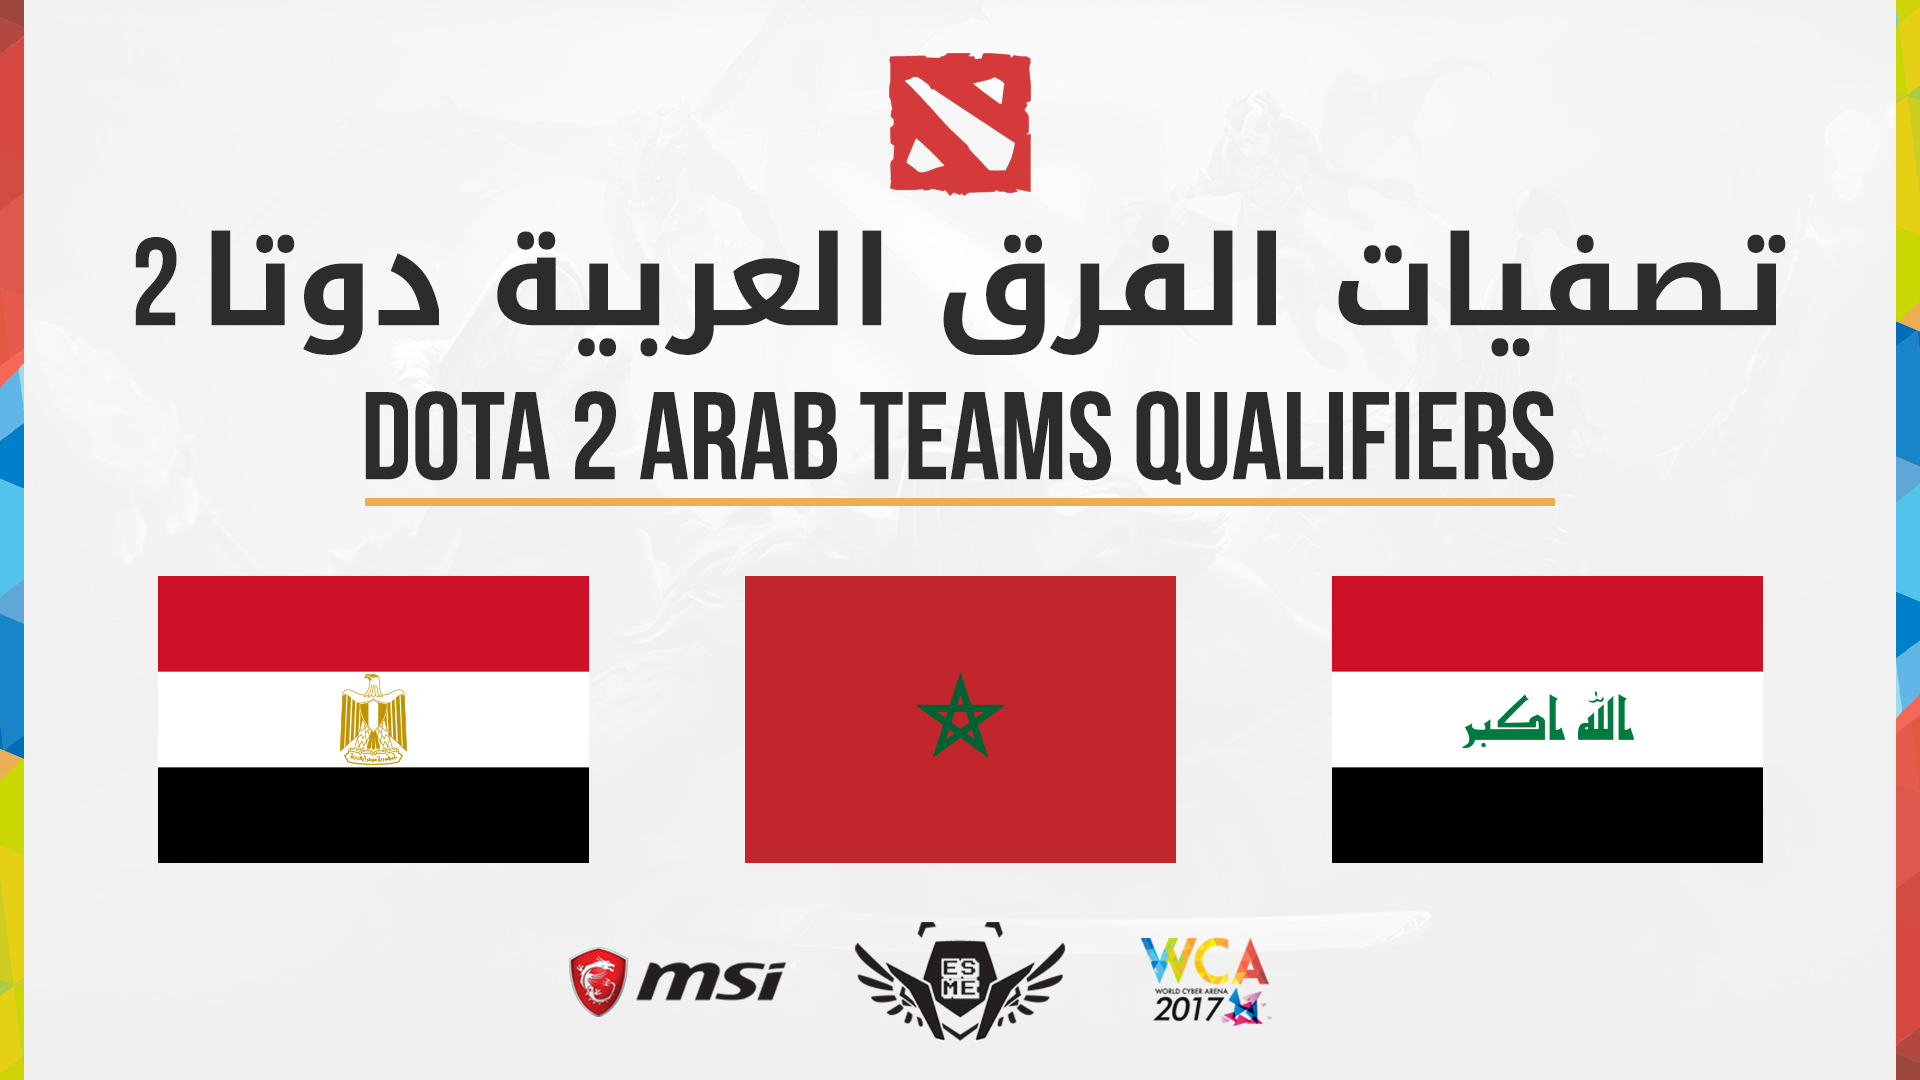 WCA 2017 MENA Egypt Morocco Iraq Qualifiers Dota 2